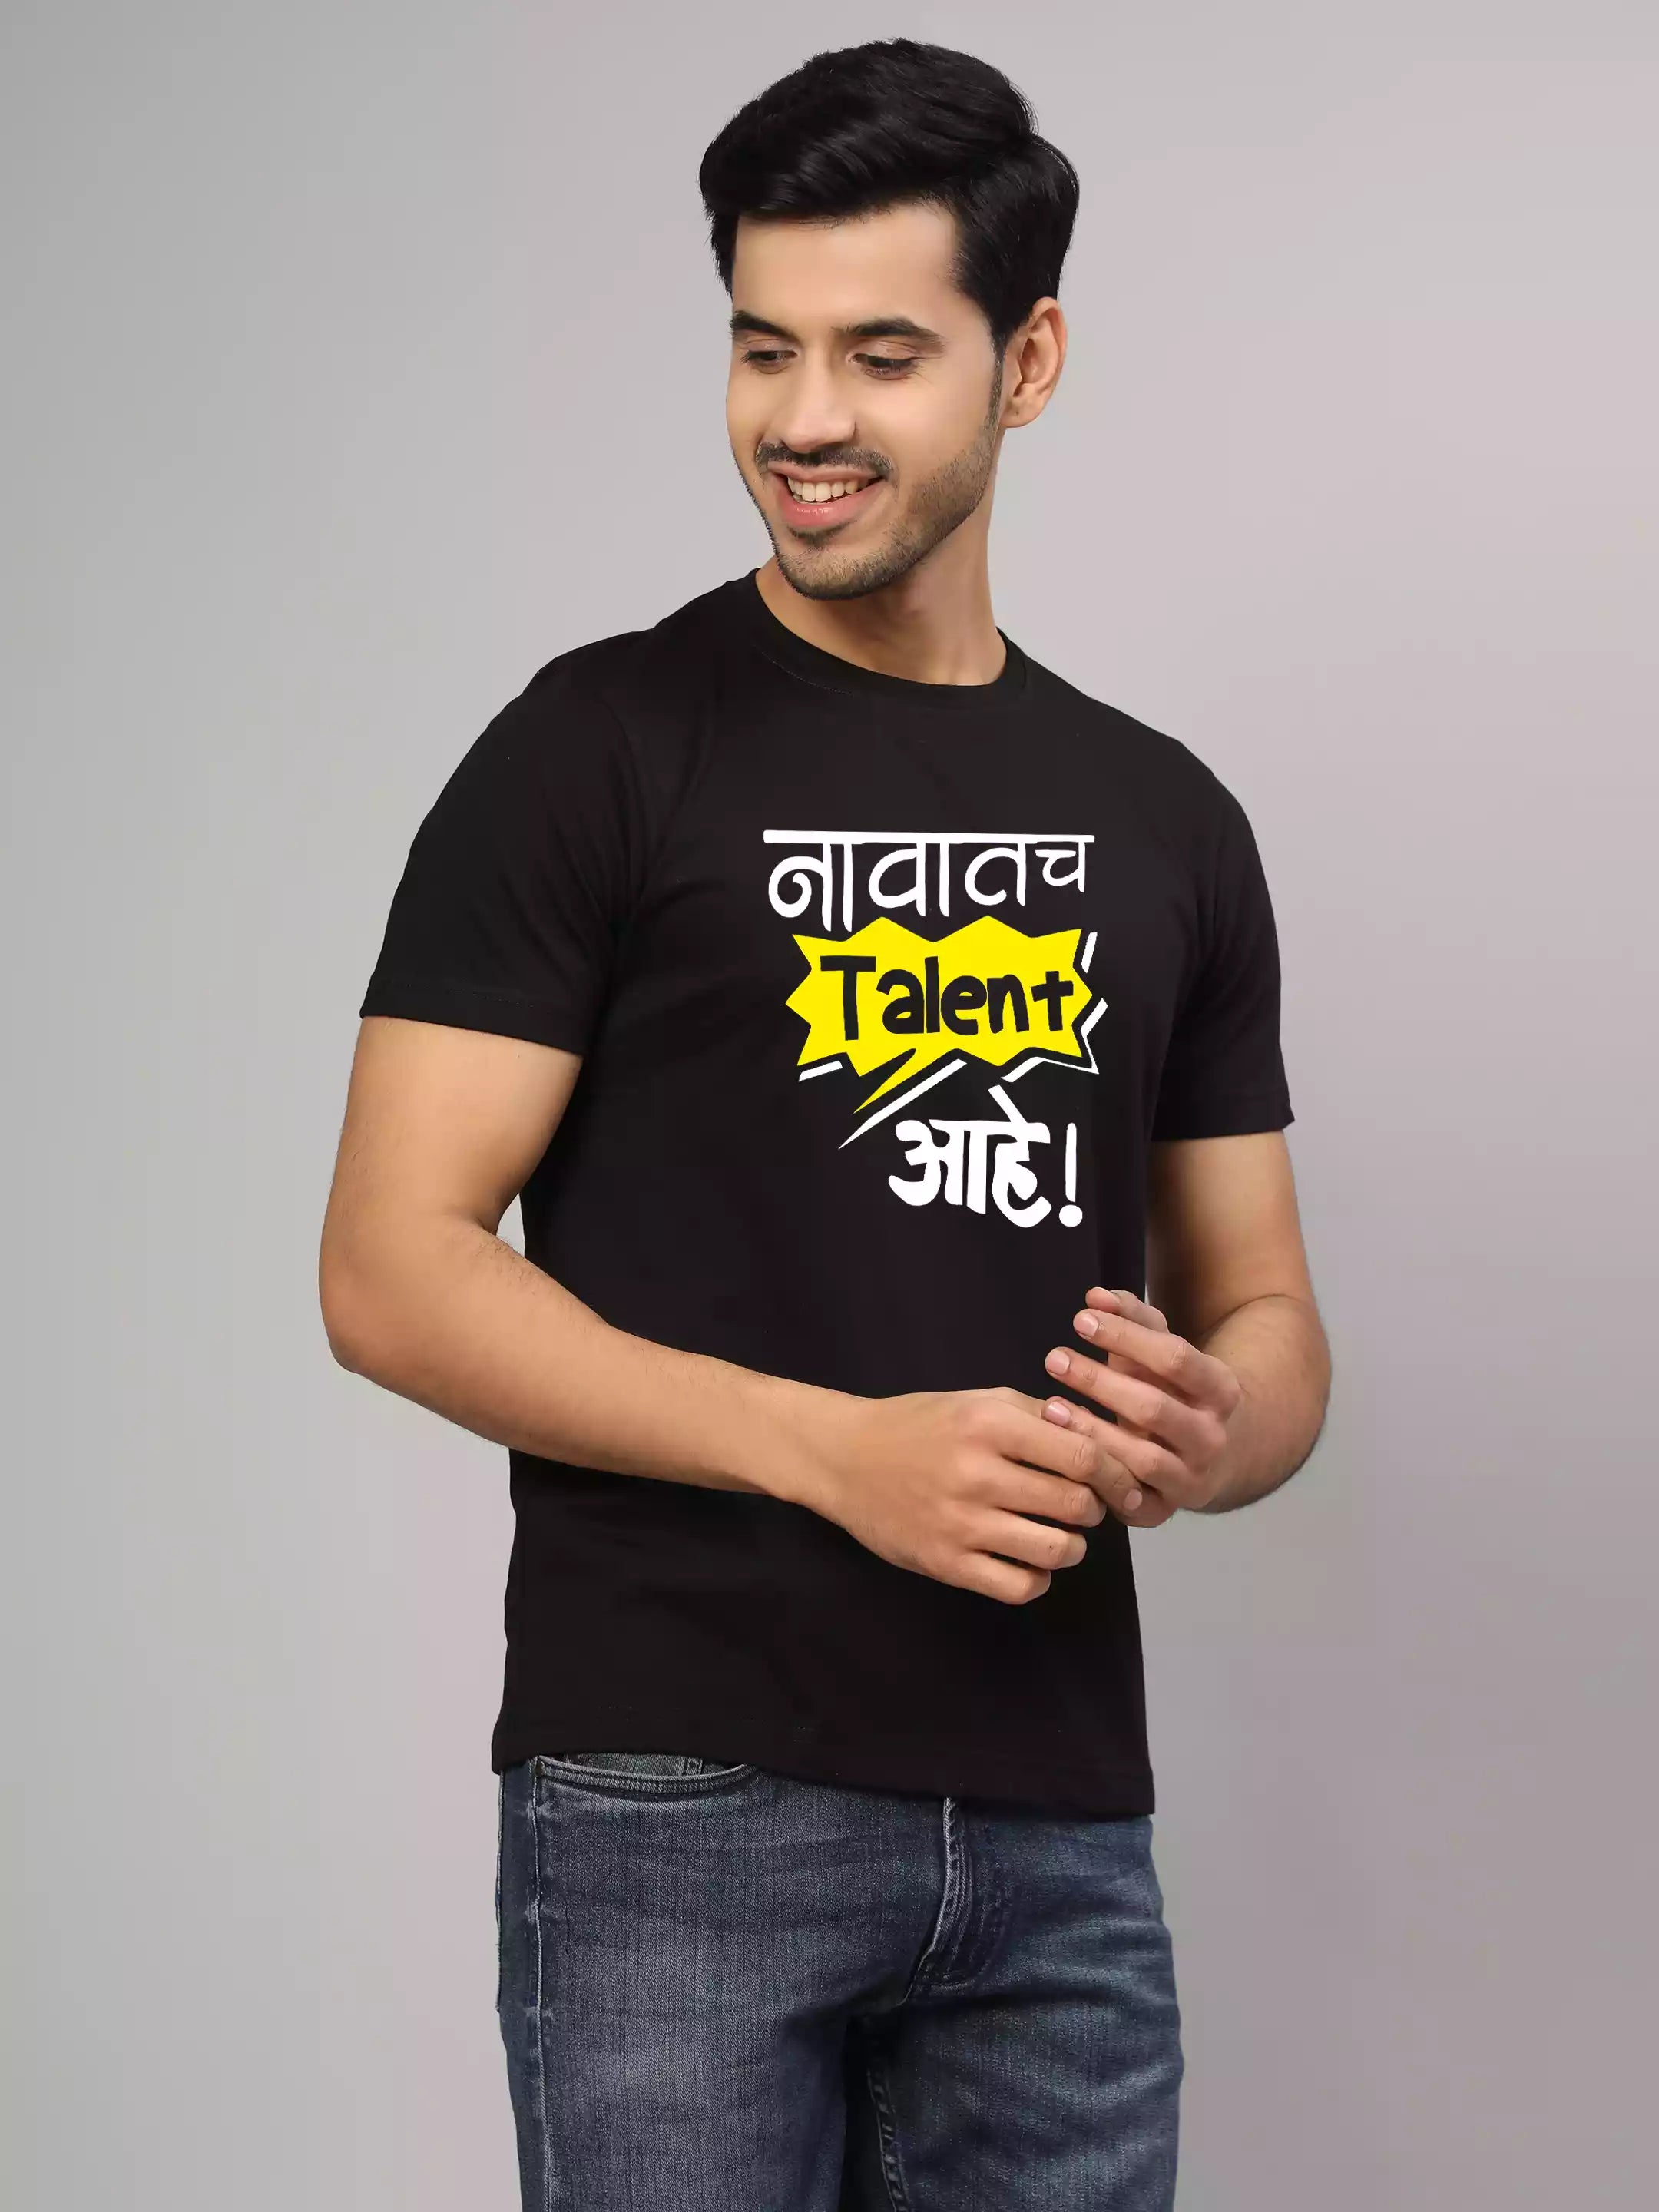 Navatach Talent - Sukhiaatma Unisex Marathi Graphic Printed Black T-shirt